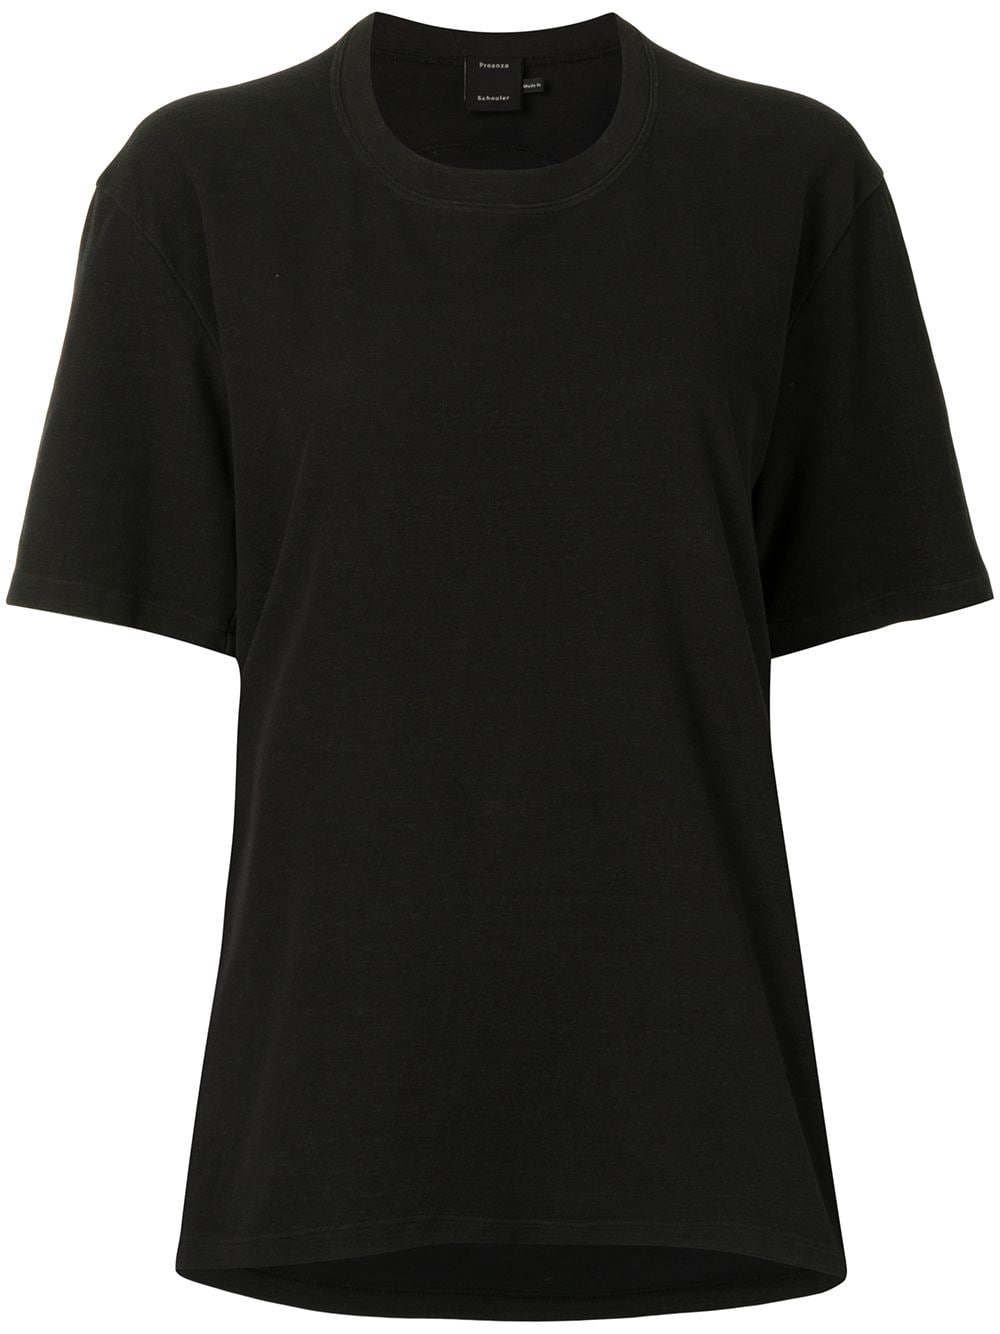 Proenza Schouler overdyed eco core jersey T-shirt - Black von Proenza Schouler